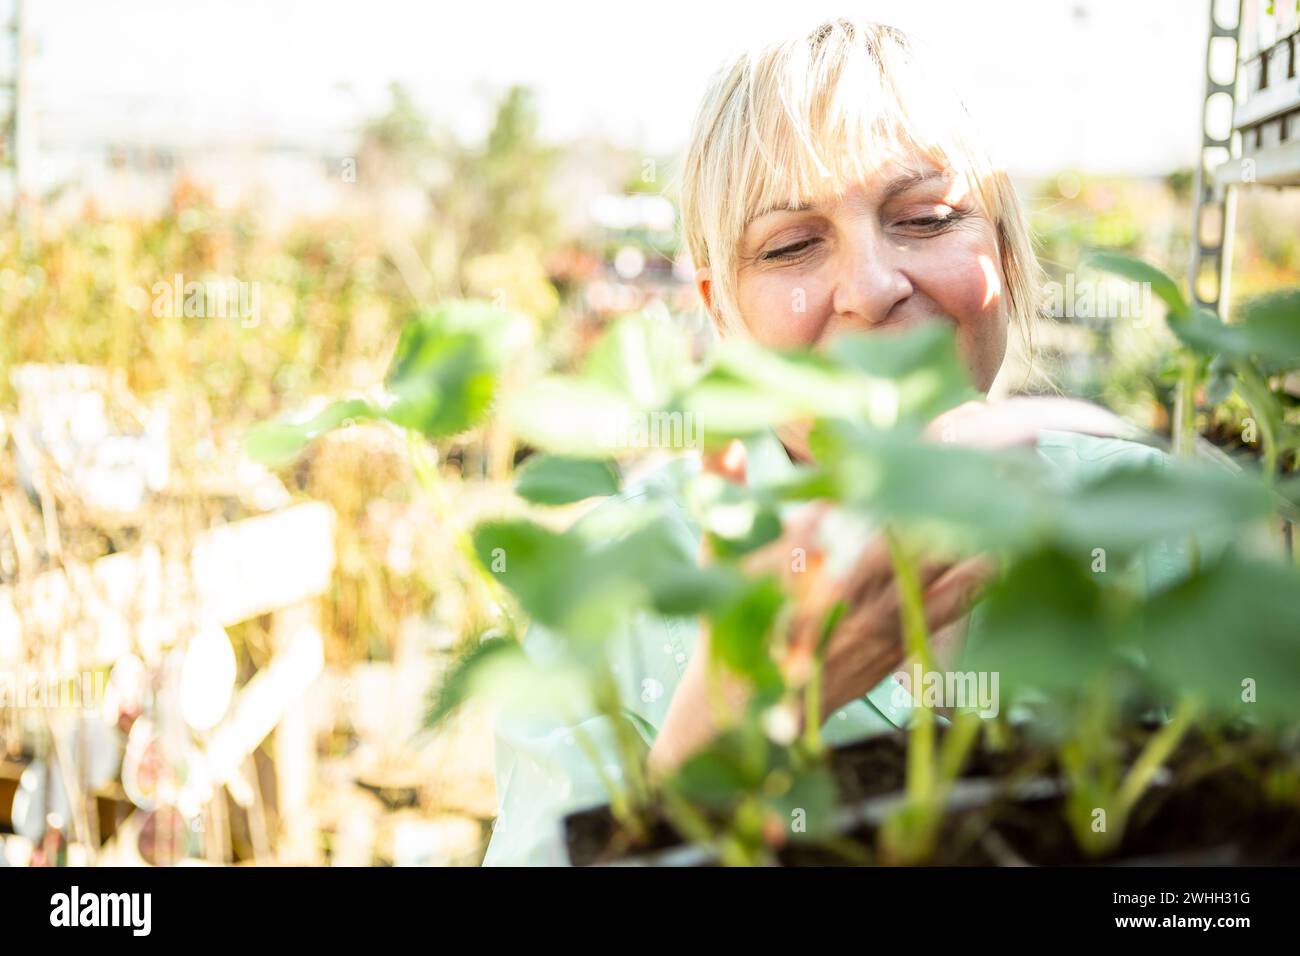 Gardener with strawberry plants Stock Photo